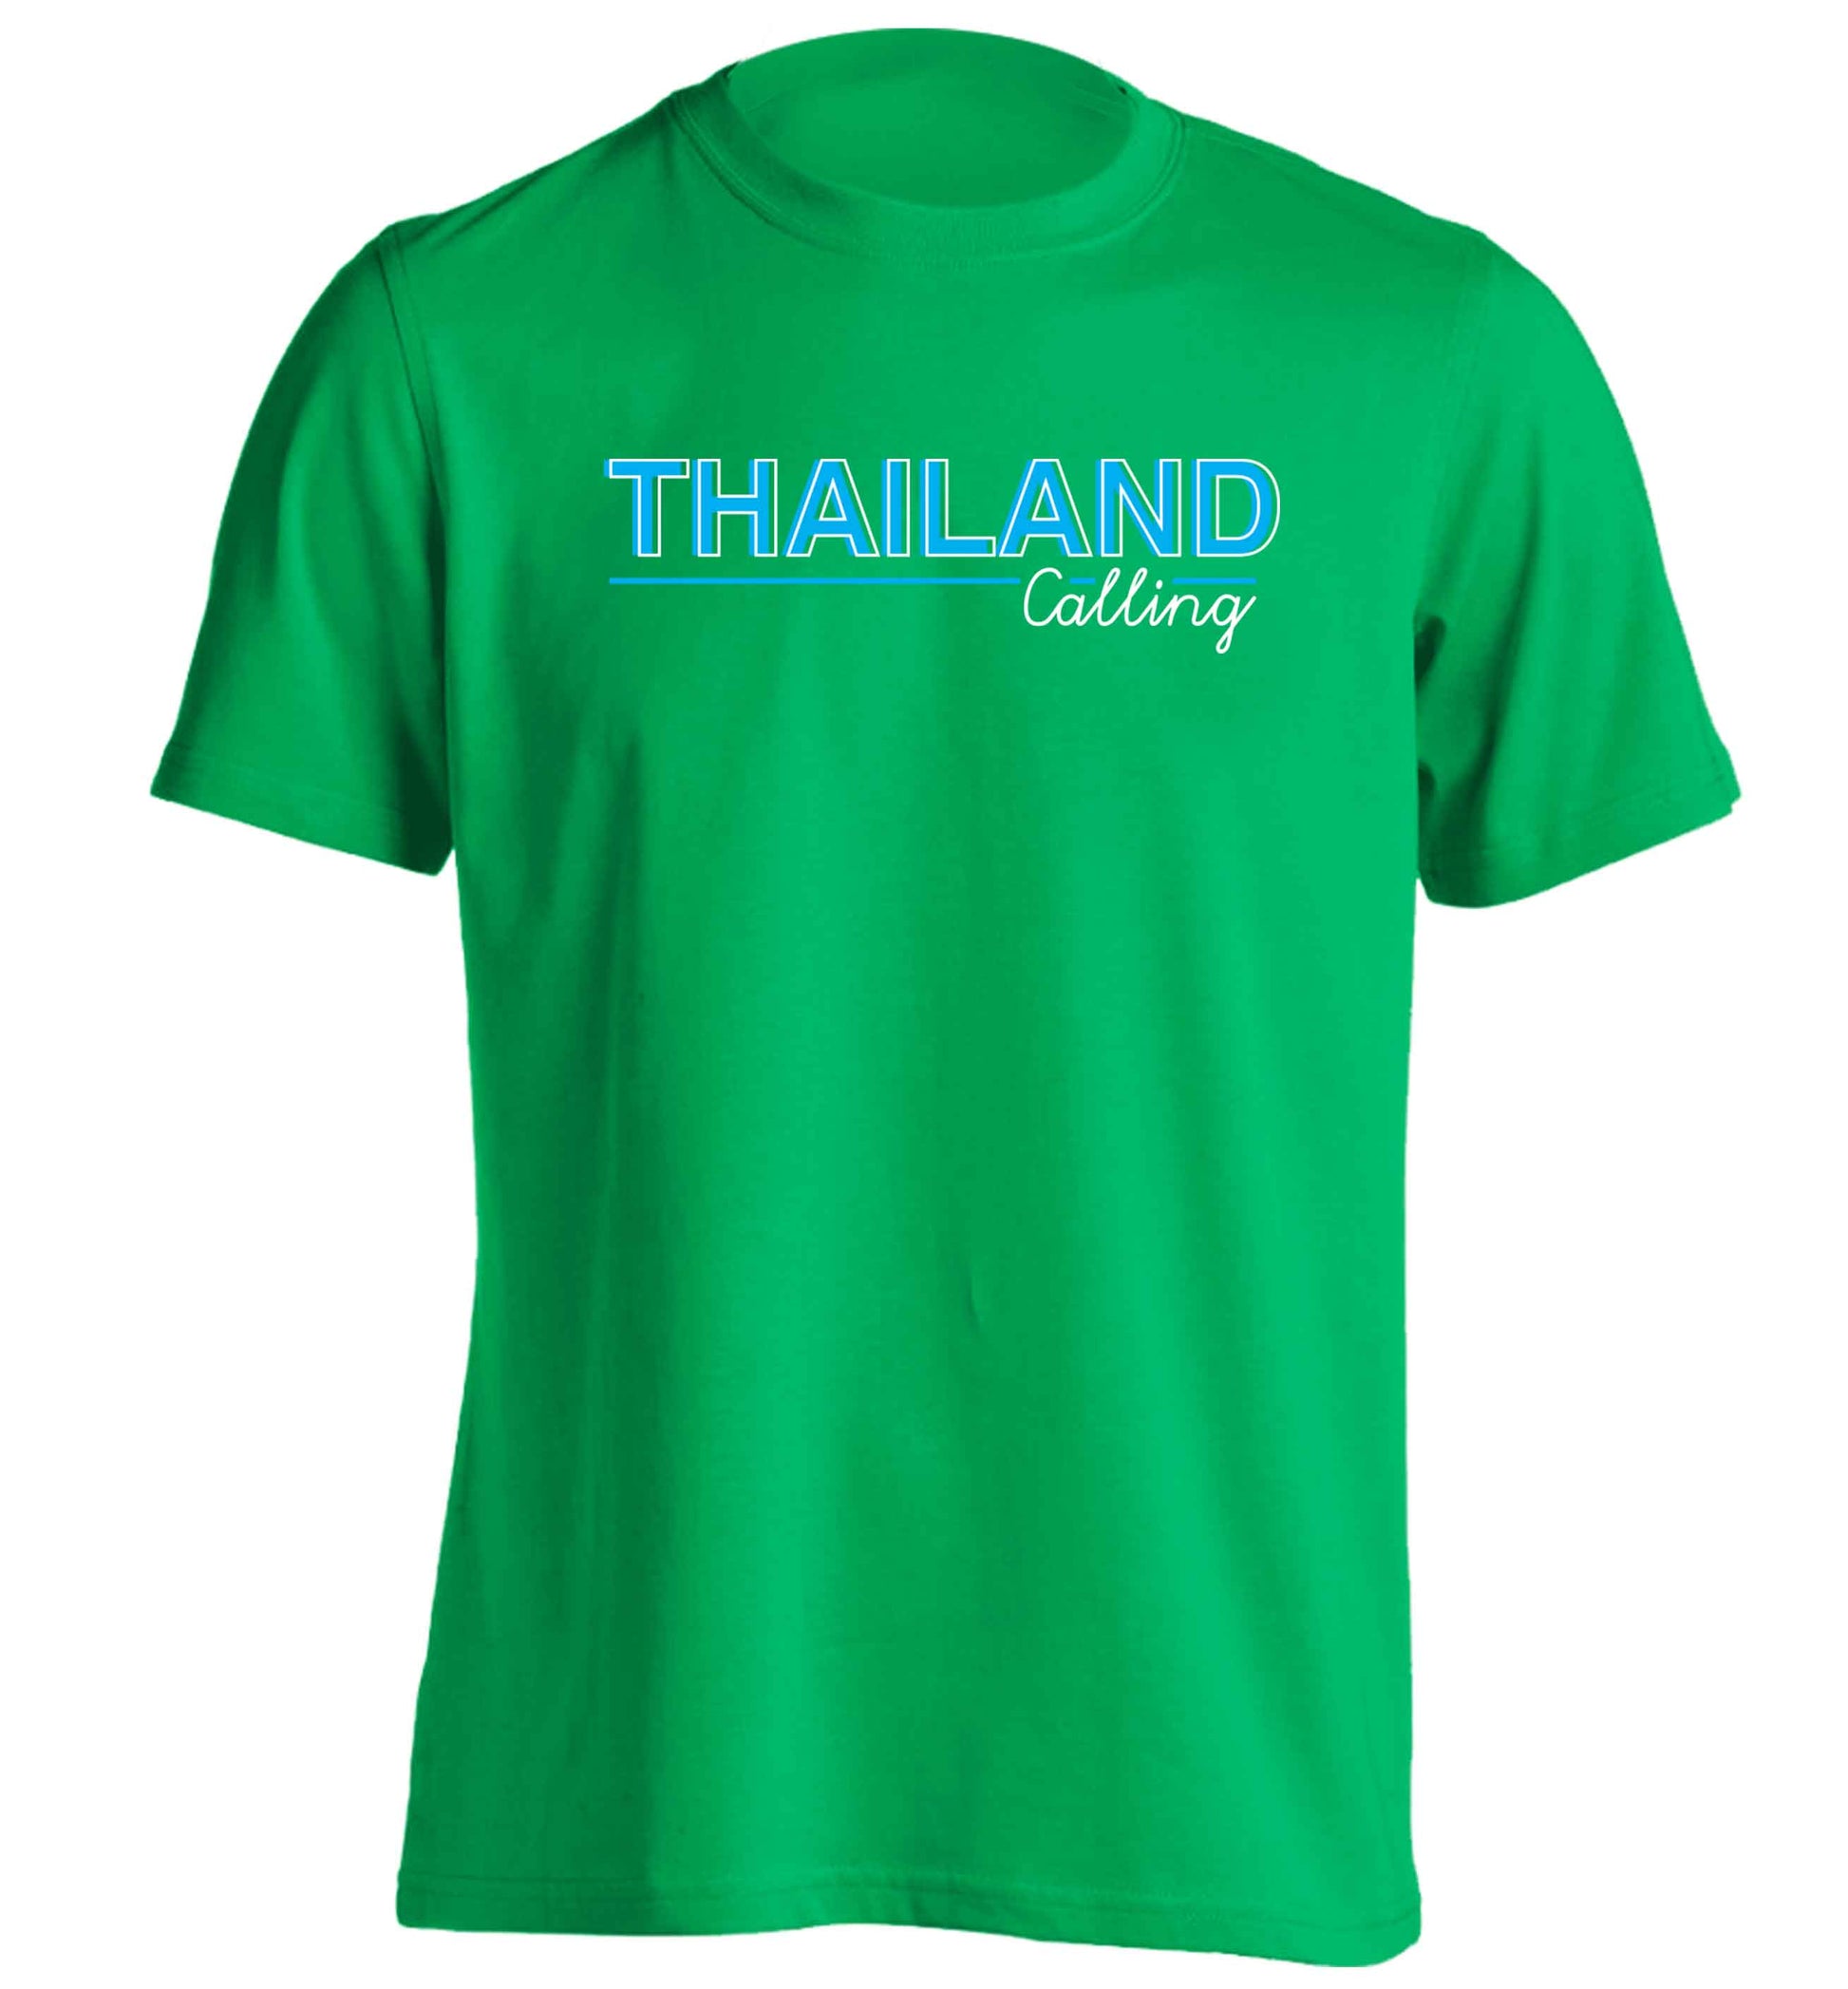 Thailand calling adults unisex green Tshirt 2XL